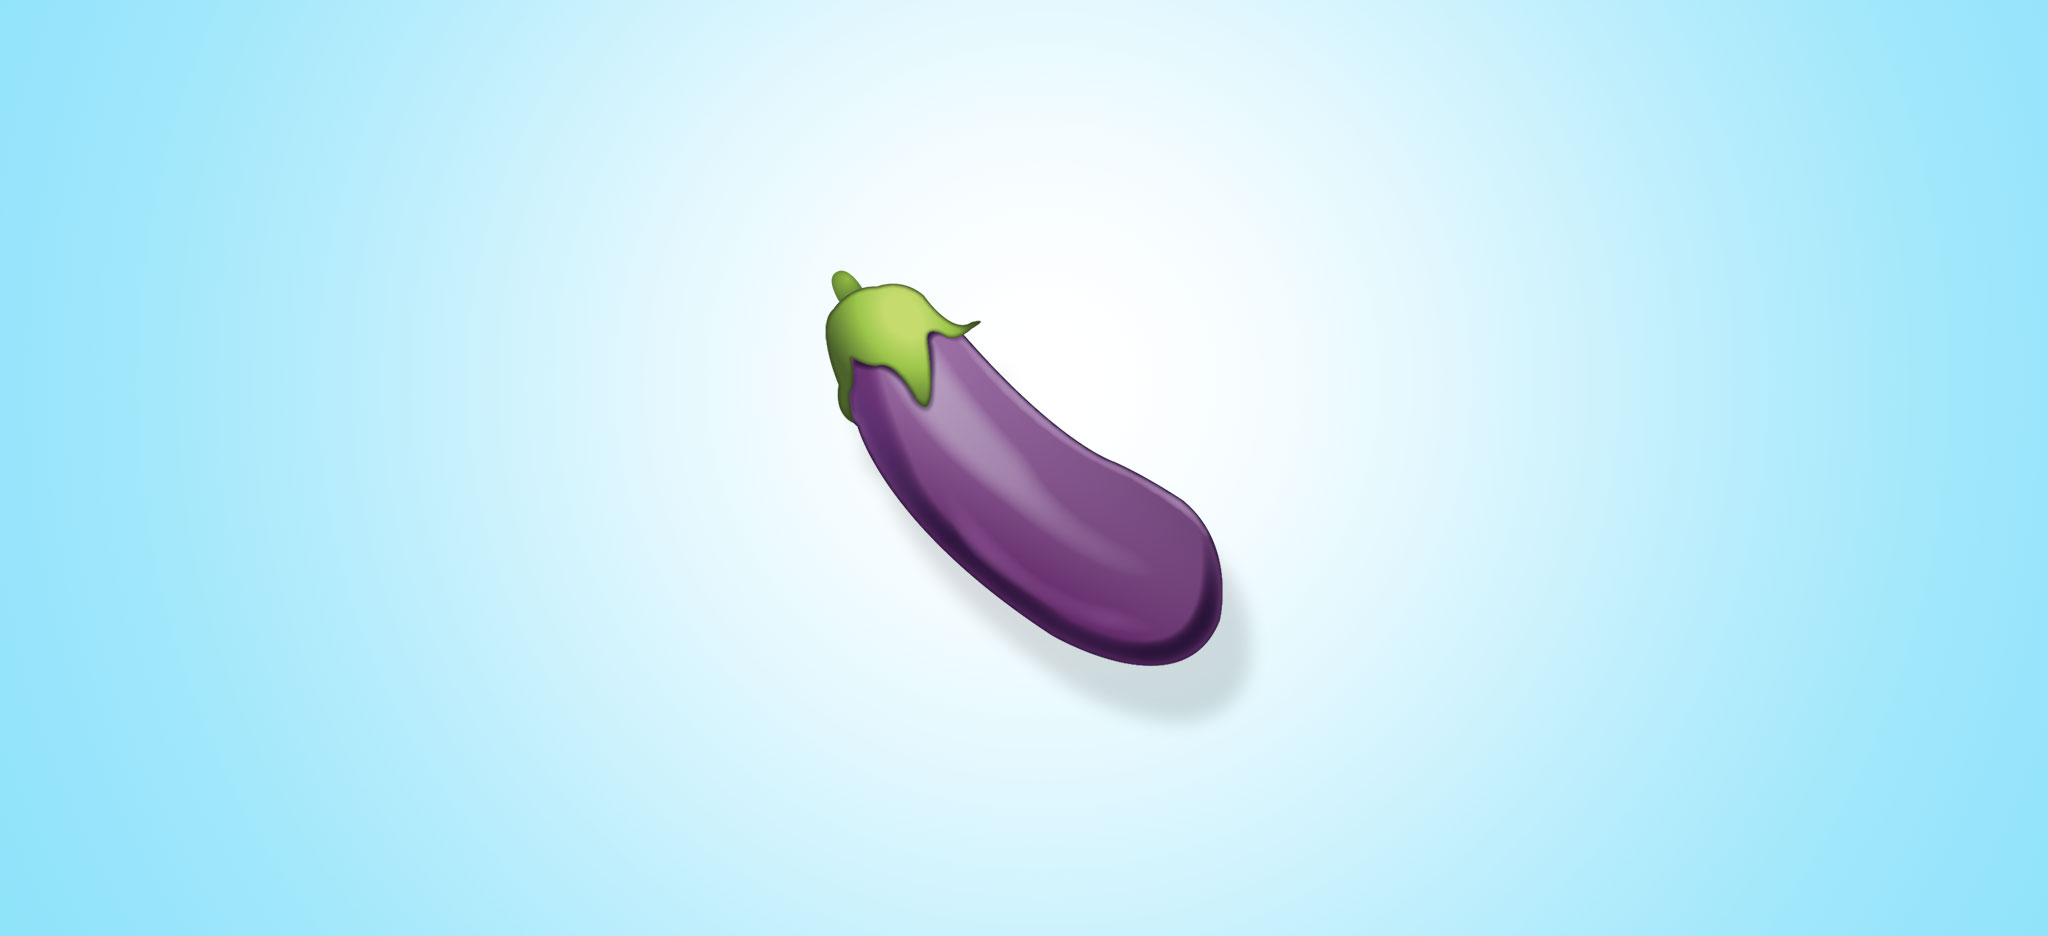 Eggplant sexting emoji